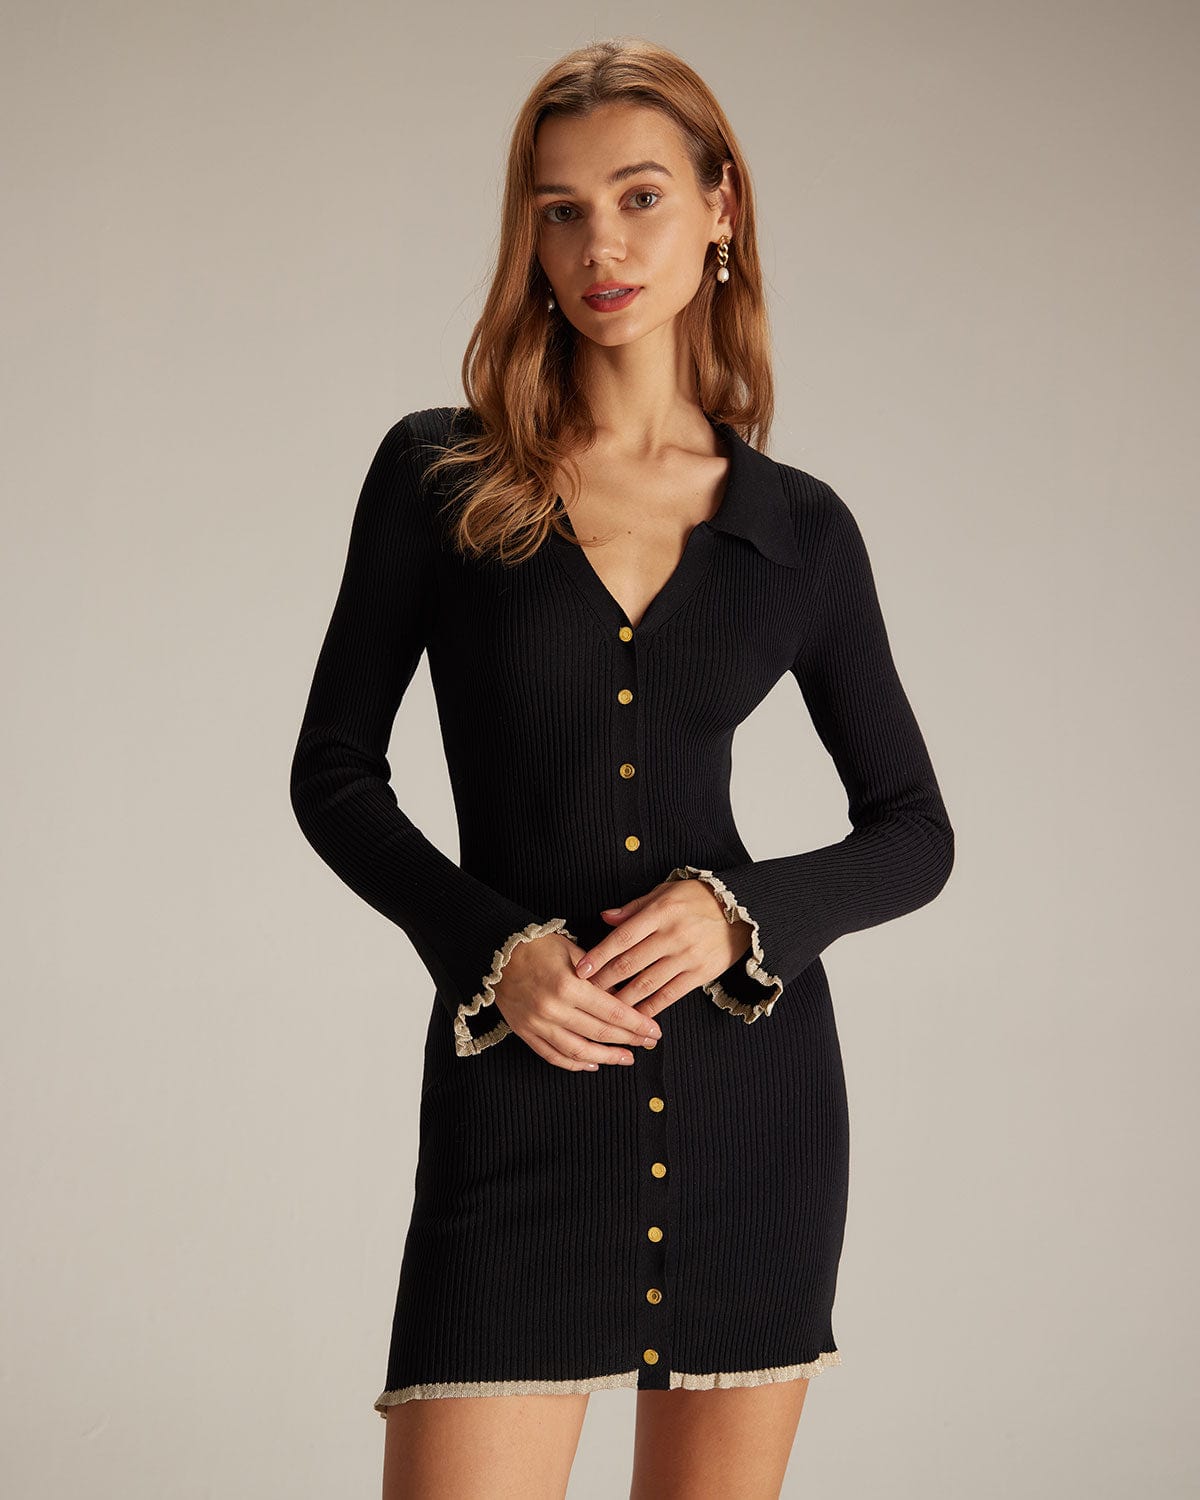 The Black V Neck Contrast Trim Knit Mini Dress & Reviews - Black - Dresses